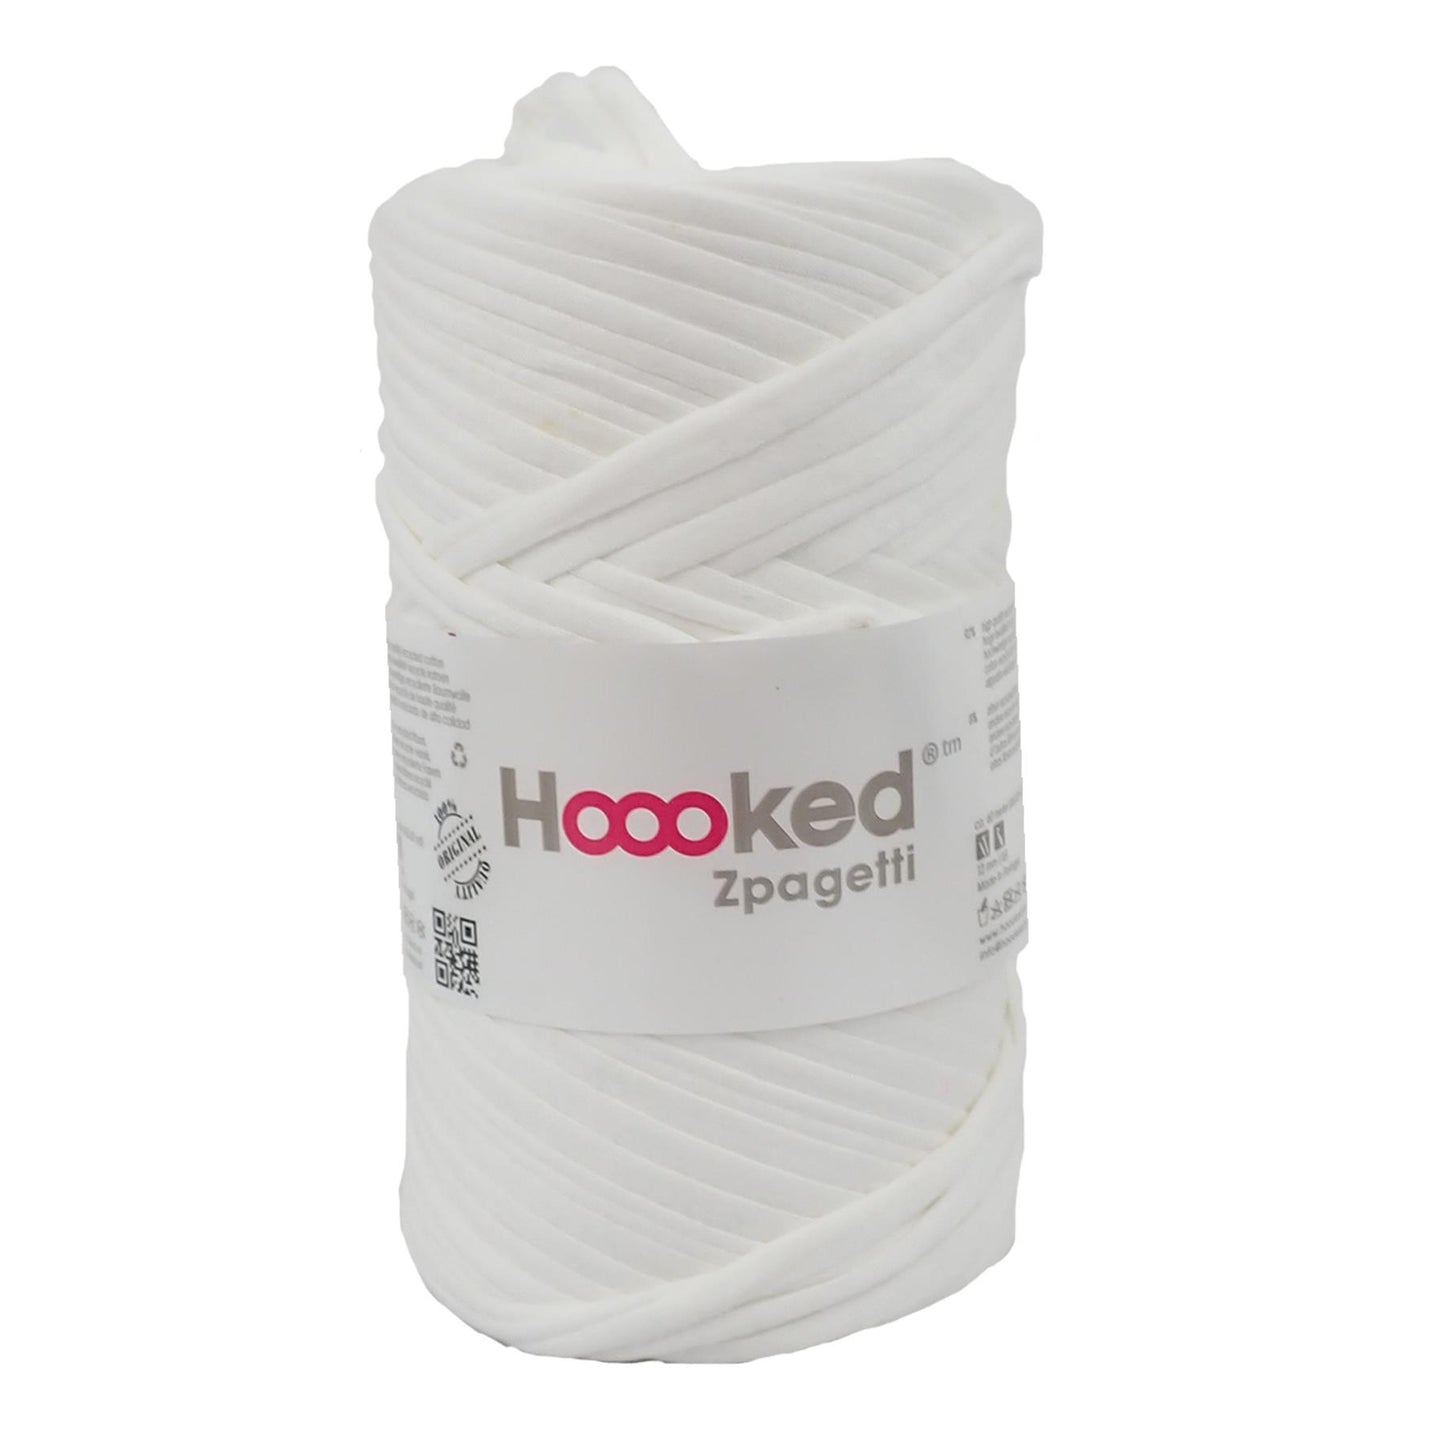 Hoooked Zpagetti White Cotton T-Shirt Yarn - 60M 350g